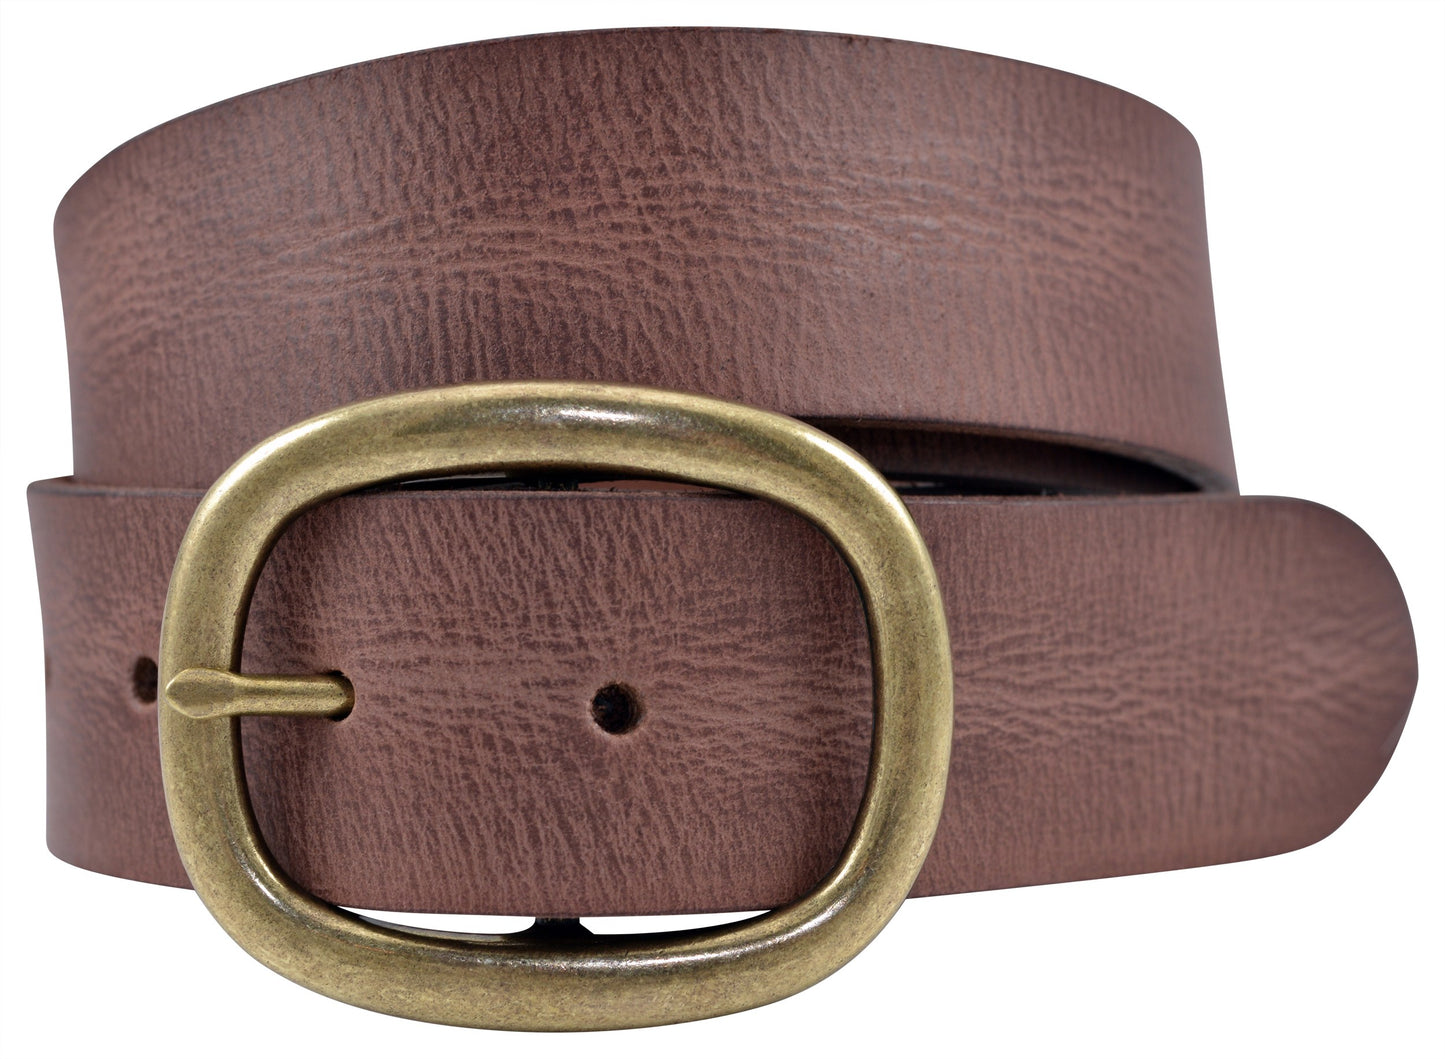 Vintage Full Grain Buffalo Leather Belt - Brown - TBS4115-200